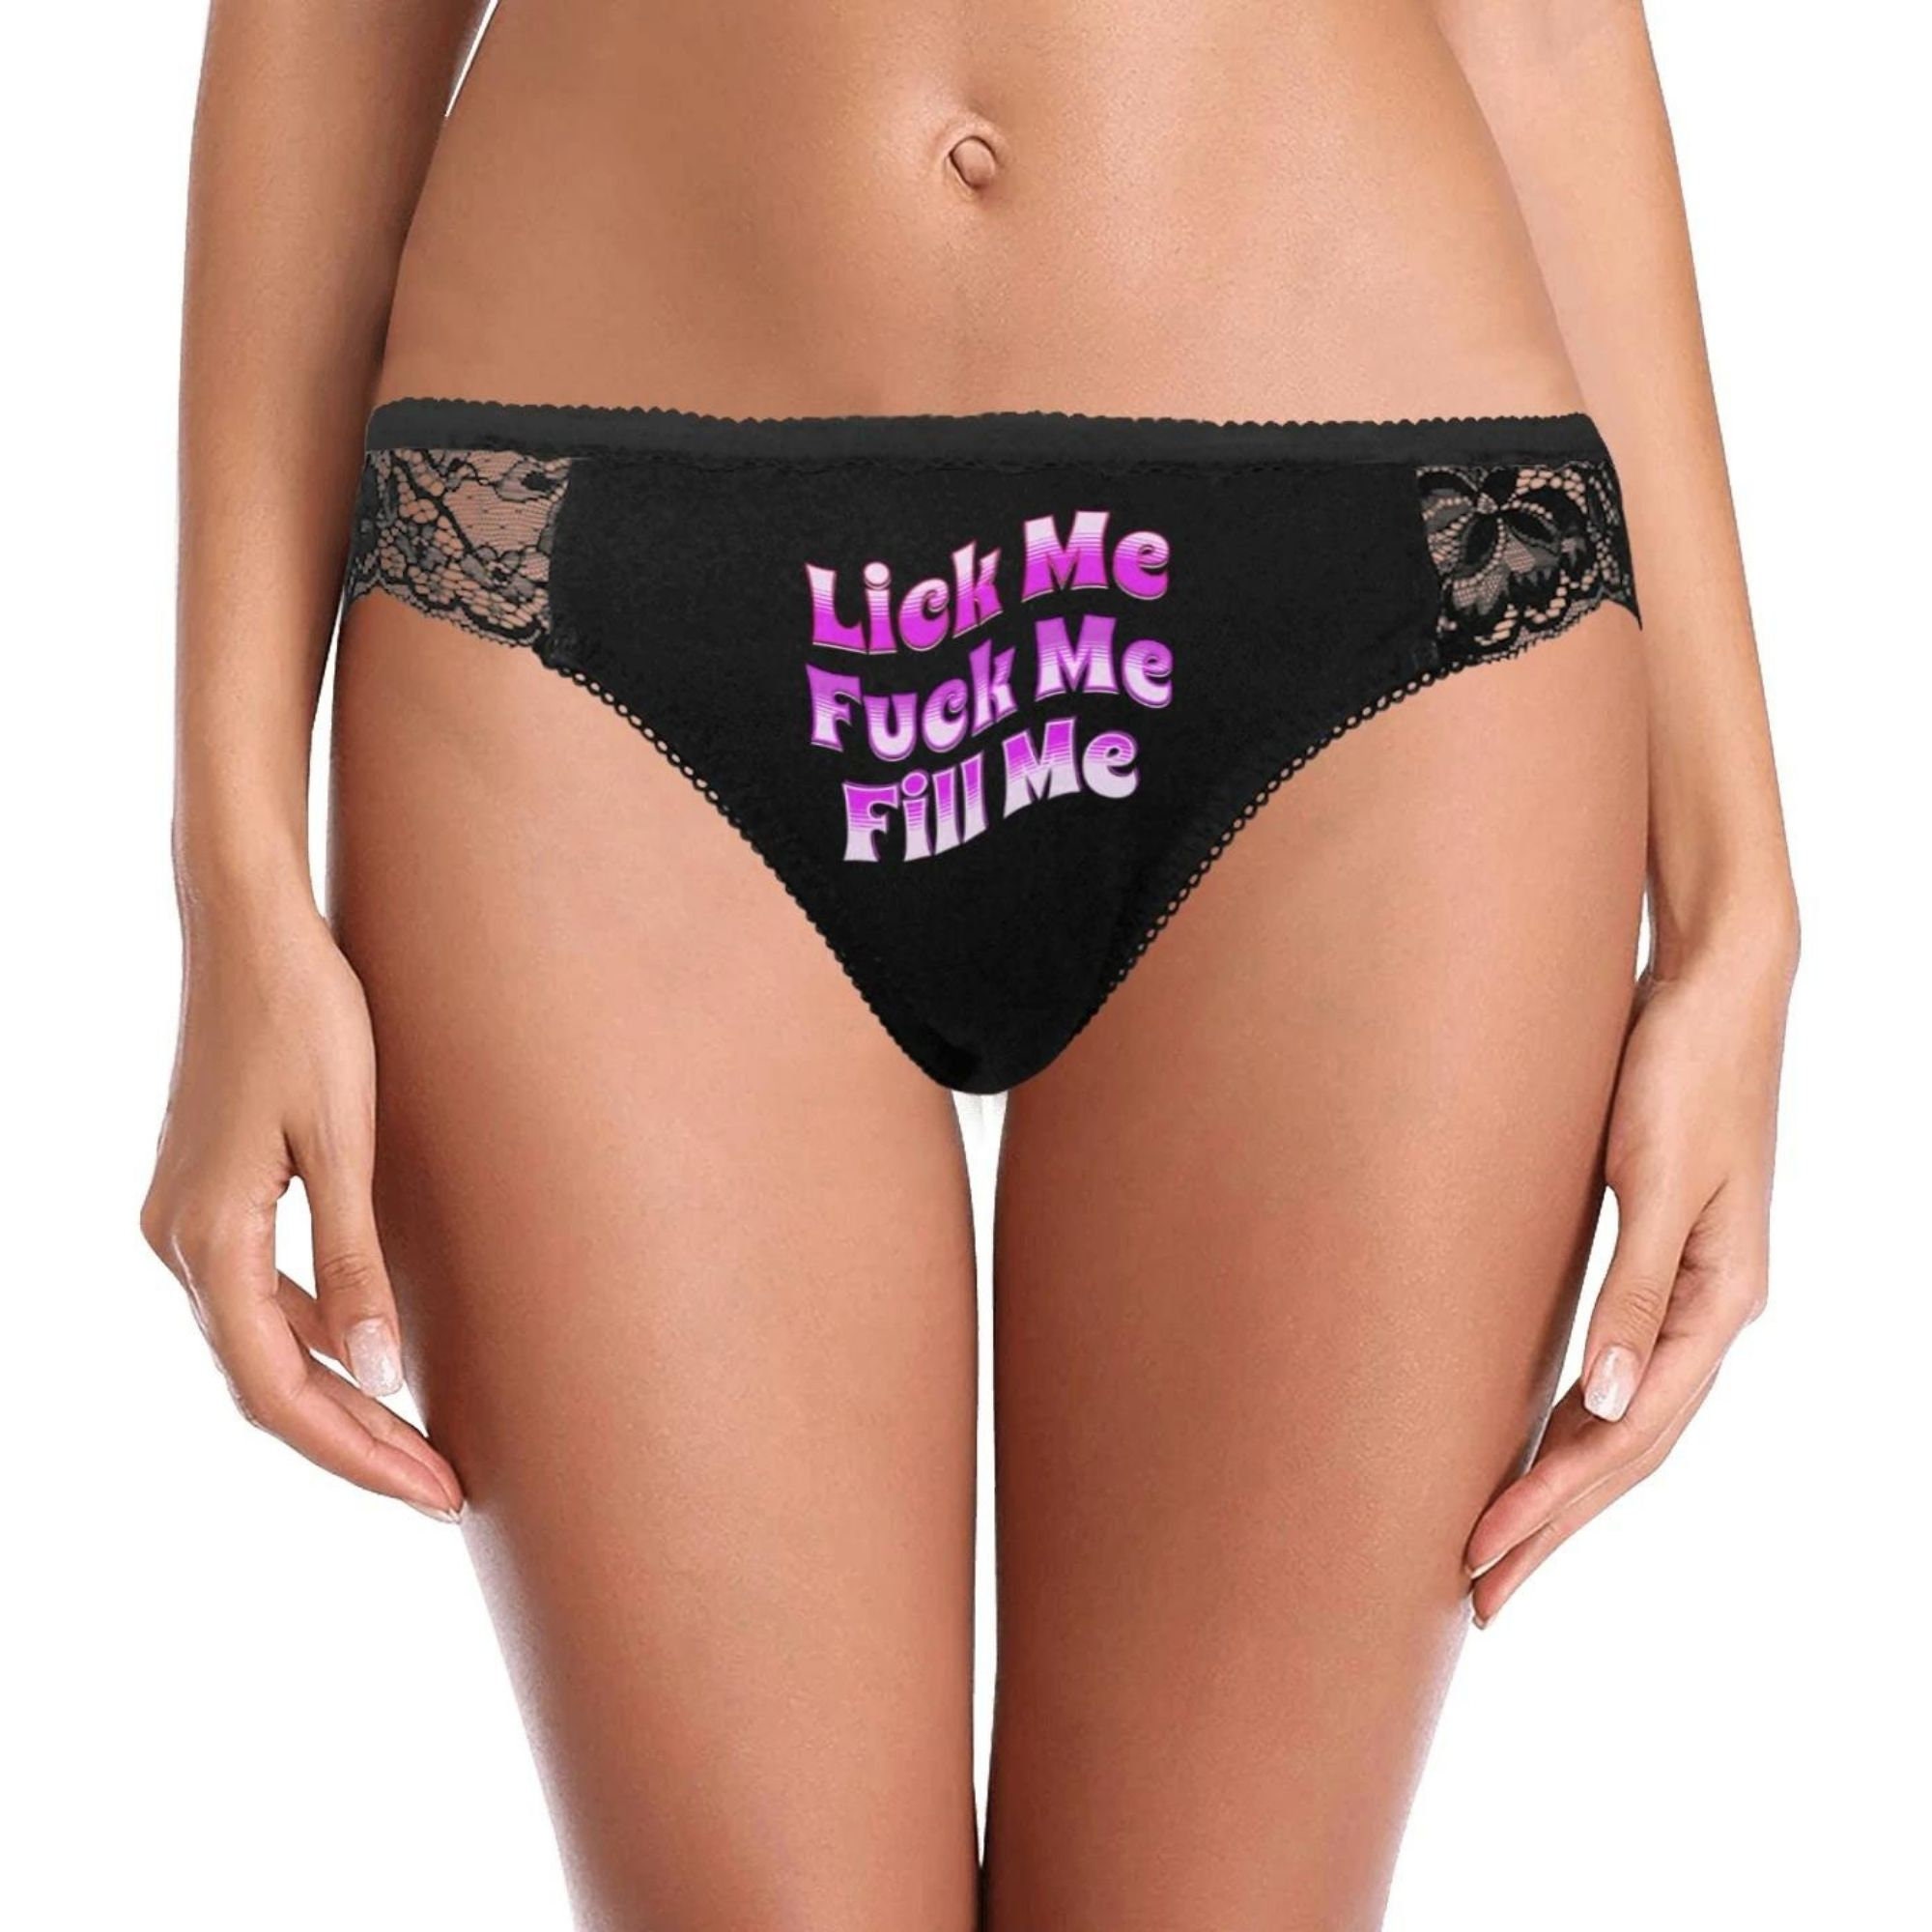 Lick Me Fuck Me Fill Me Lace Panties Hotwife Lace Lingerie